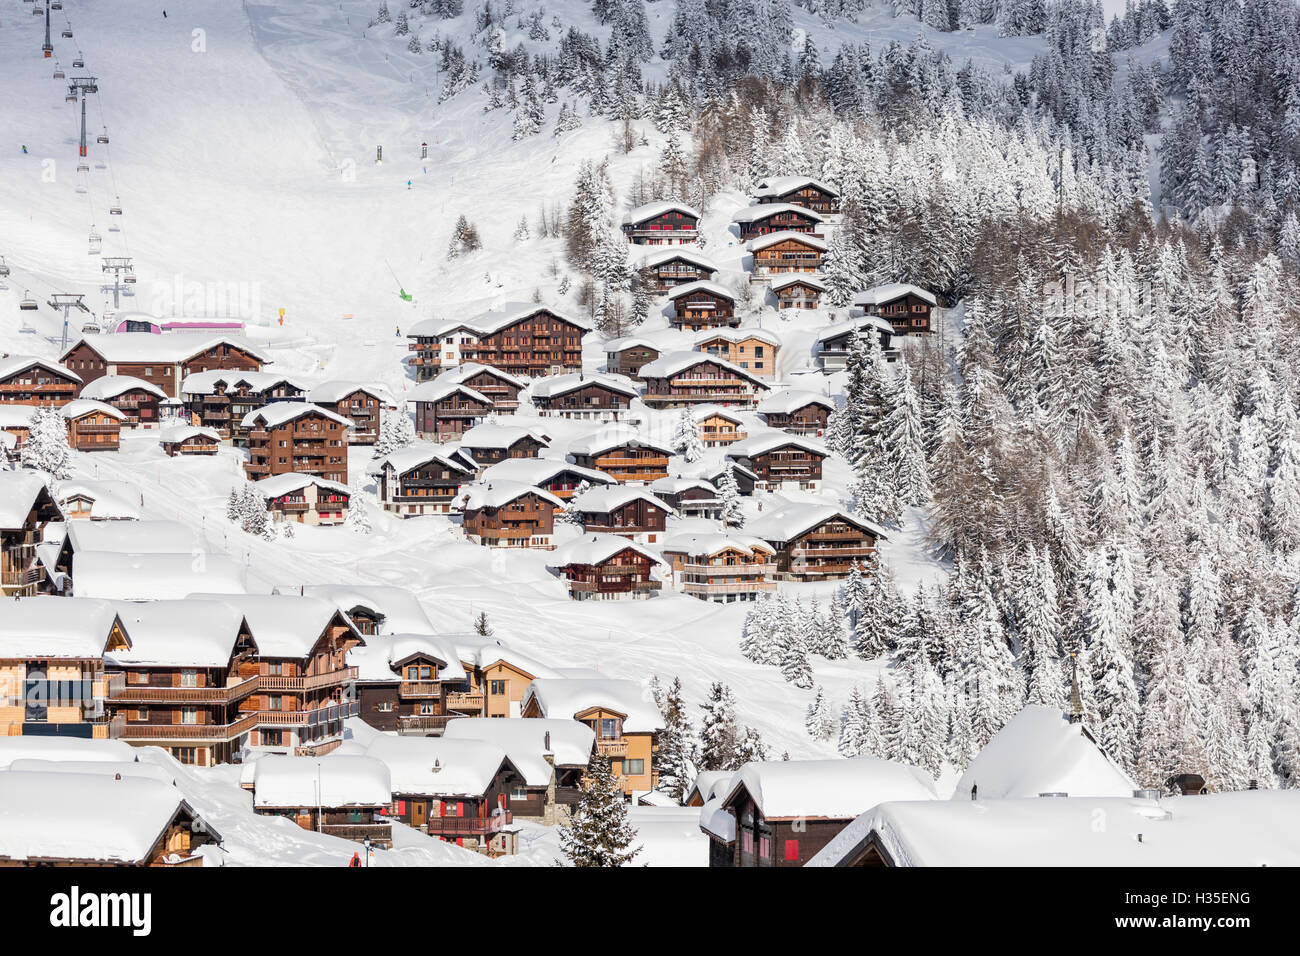 Snowy woods frame the typical alpine village and ski resort, Bettmeralp, district of Raron, canton of Valais, Switzerland Stock Photo